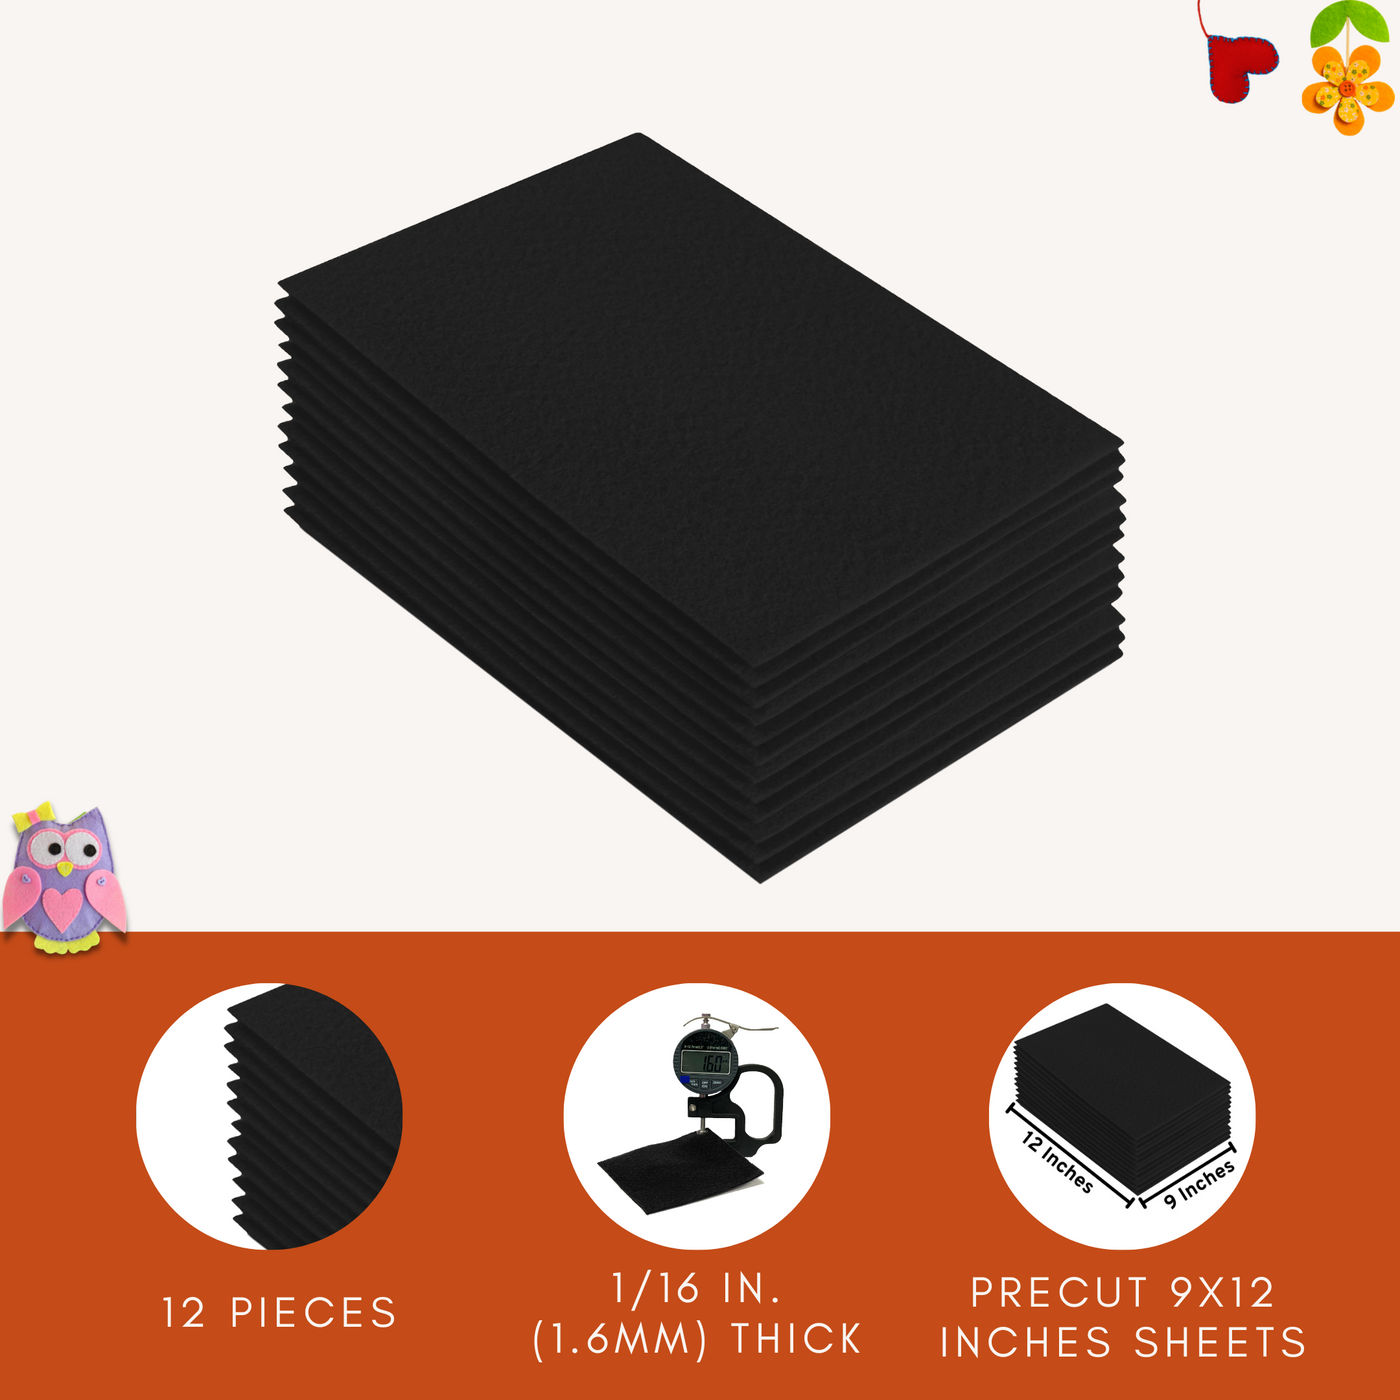 Acrylic Felt 9"X12" Sheet Packs | Black - FabricLA.com